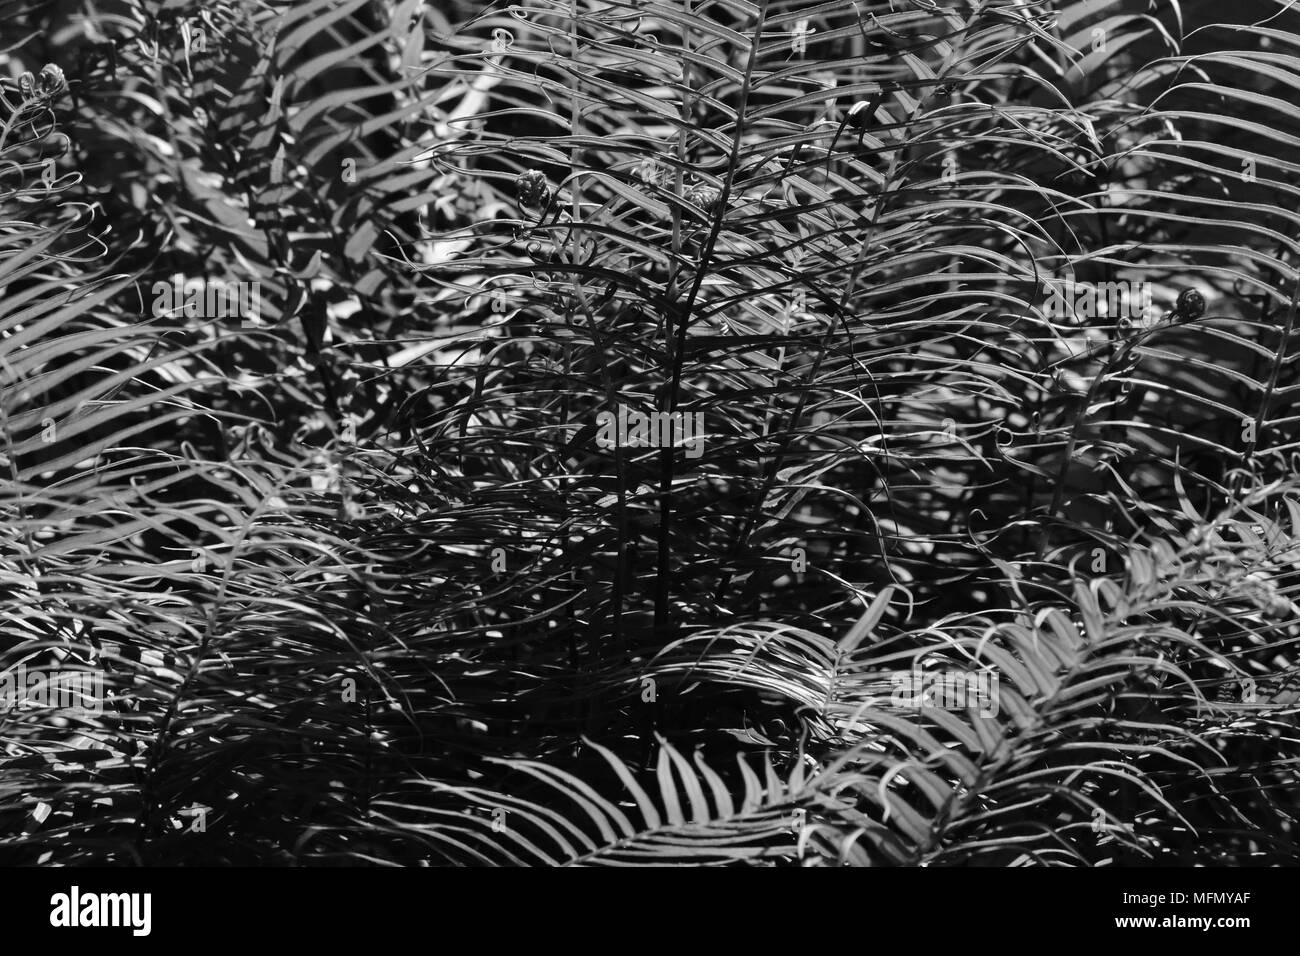 Centipede fern (Blechnum orientale) or paku ikan or Kuan Chung in monochrome. Stock Photo